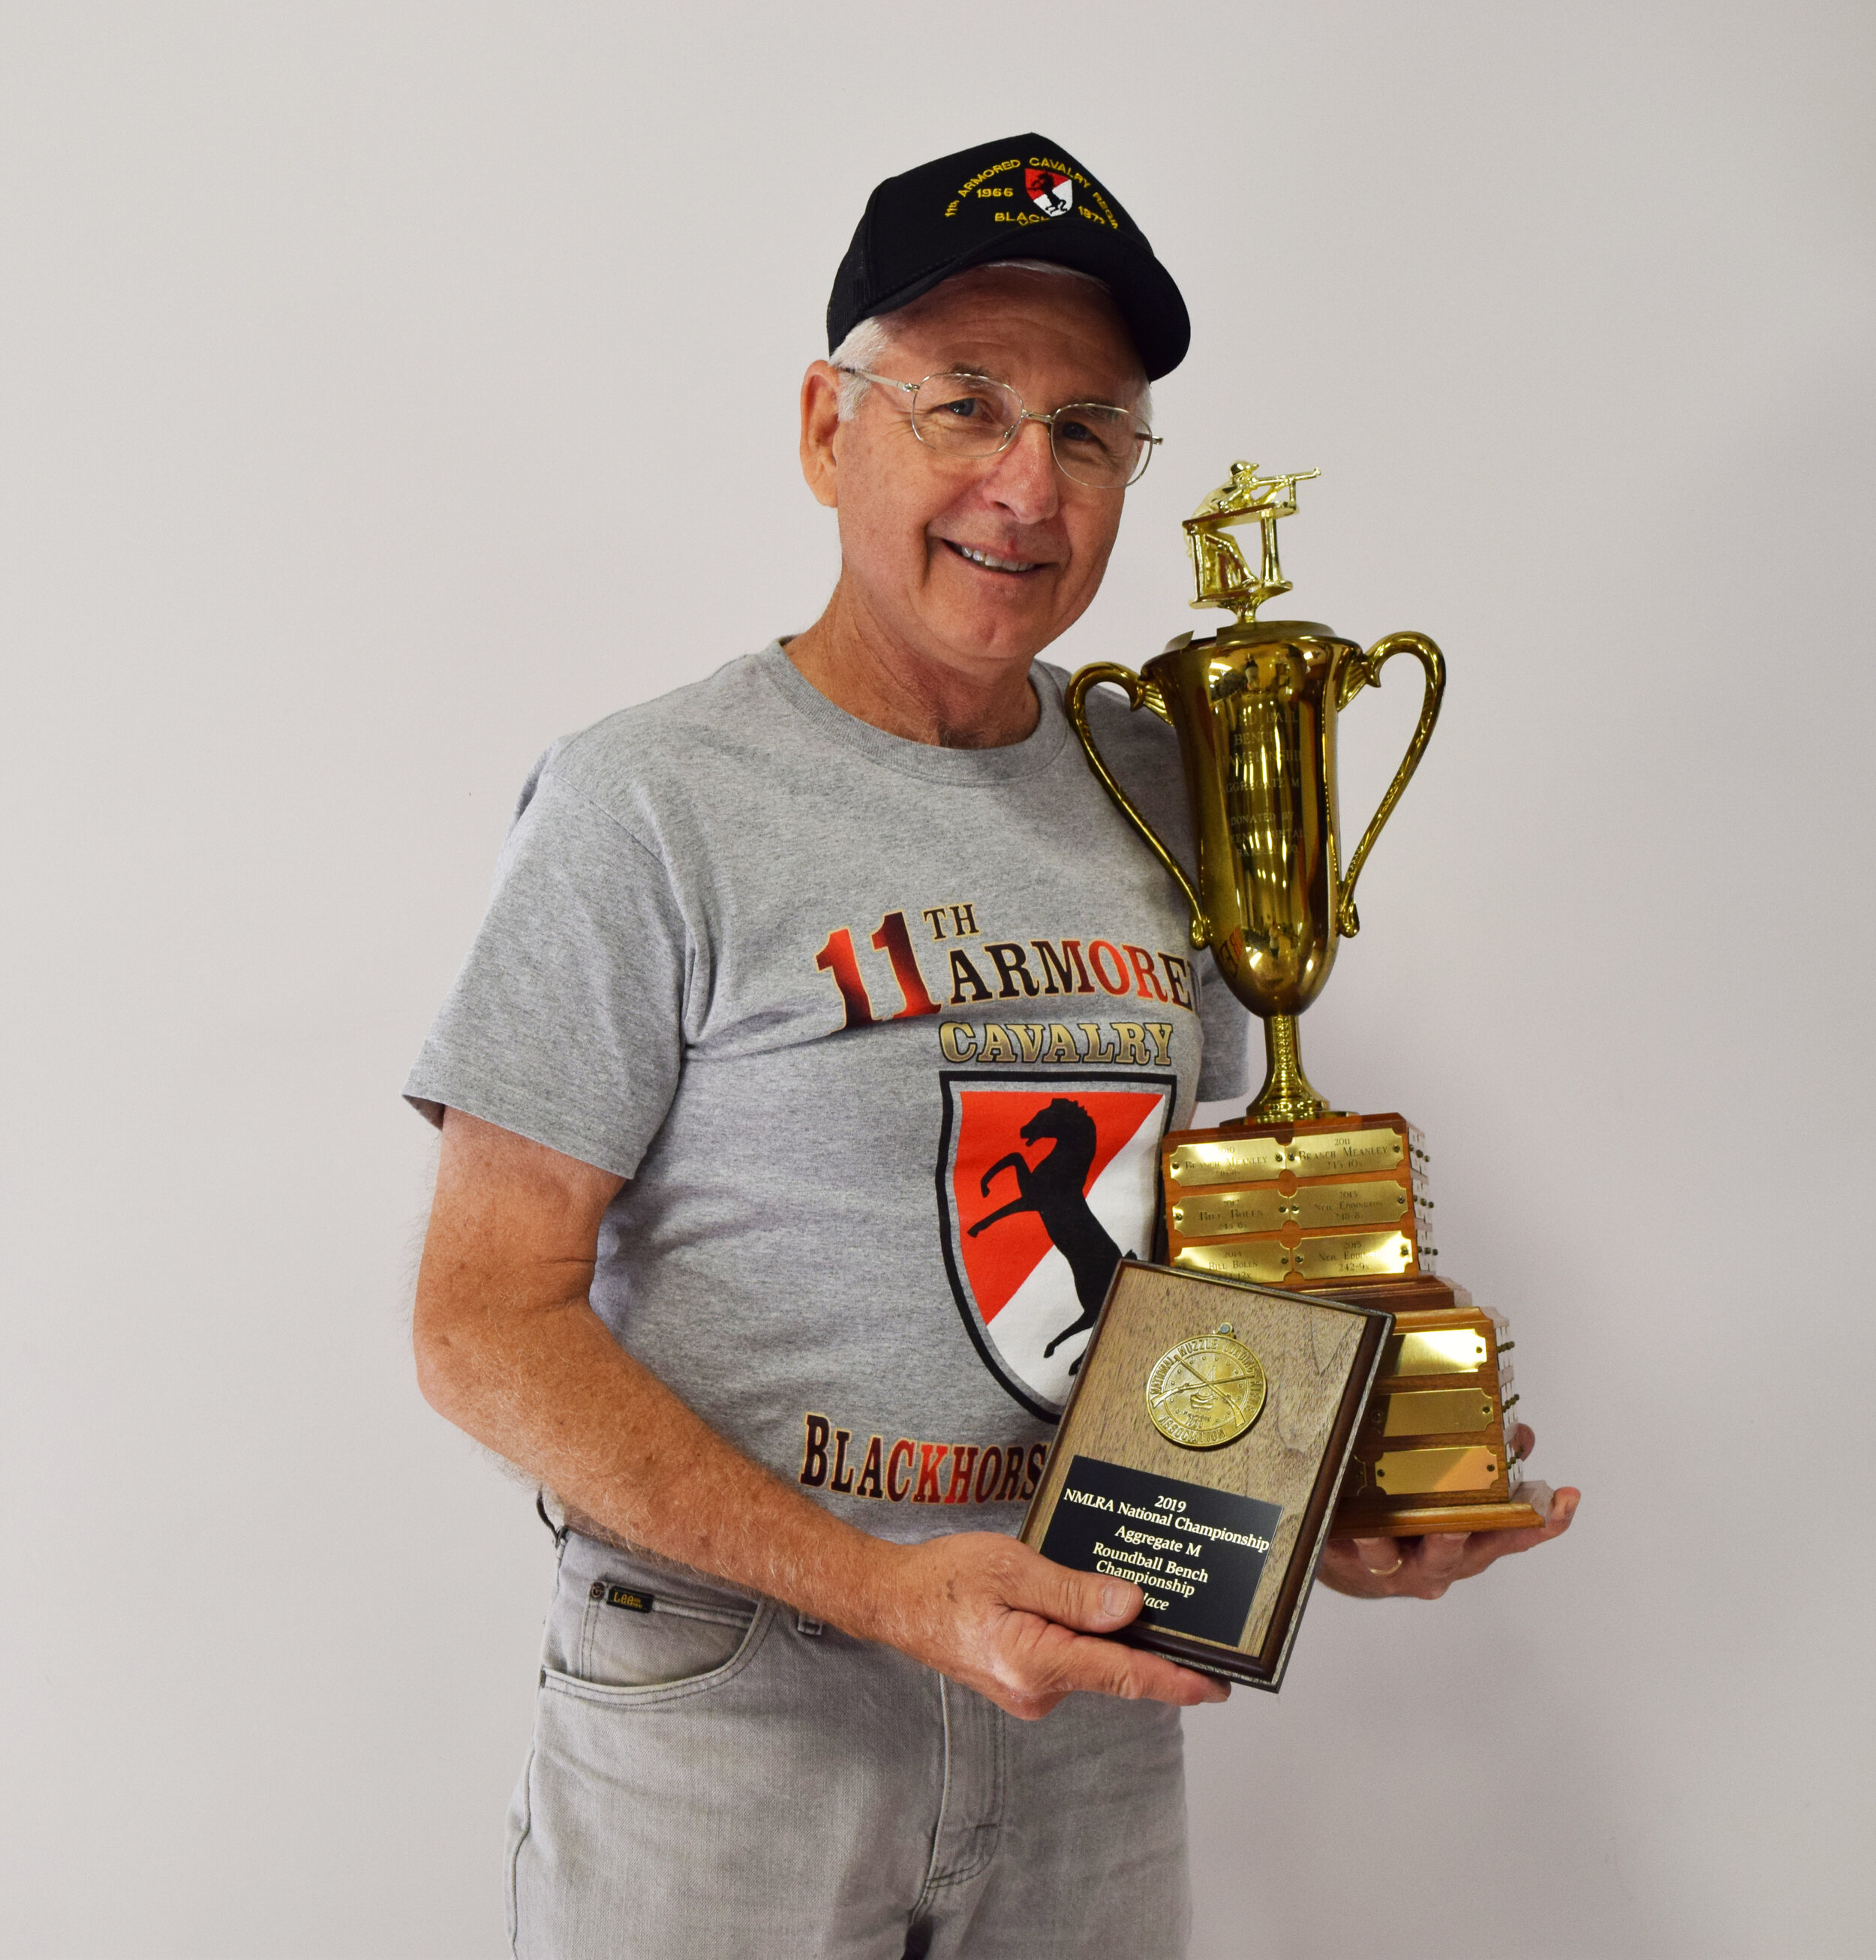  Robert Dickson - Aggregate M - Roundball Bench Championship Winner 